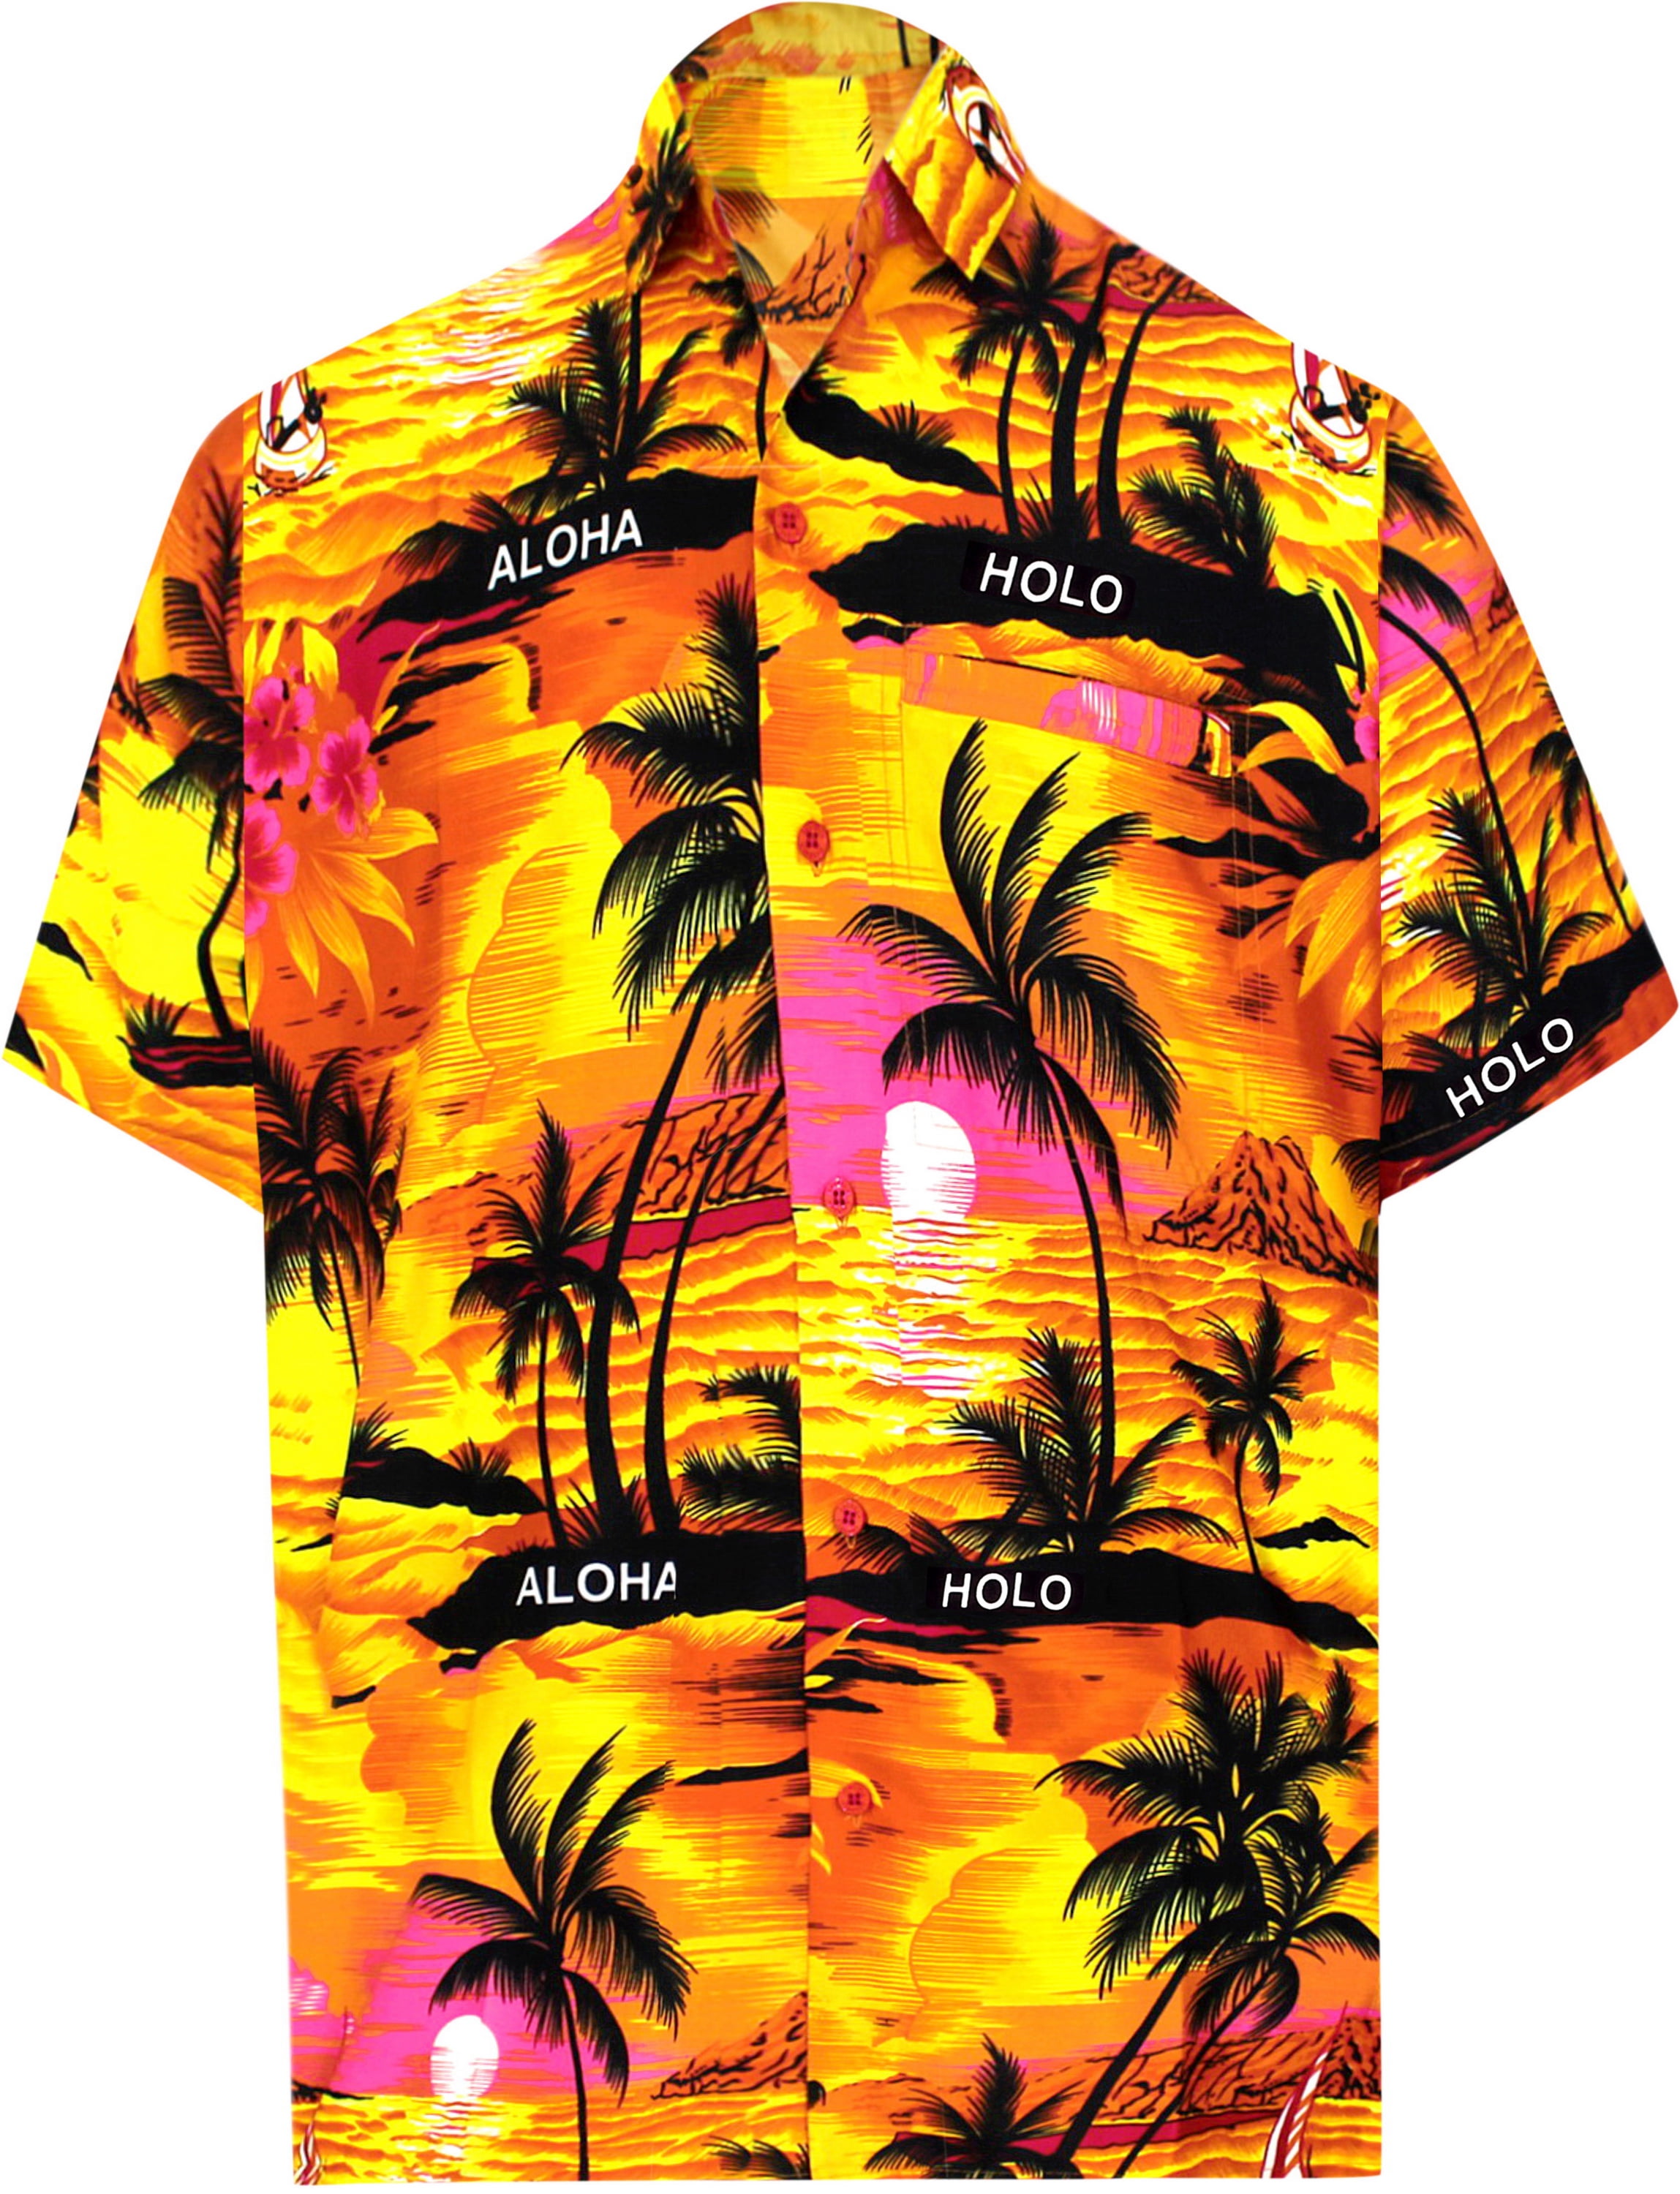 Mens Hawaiian shirt XS yellow with beer bottles 44/"